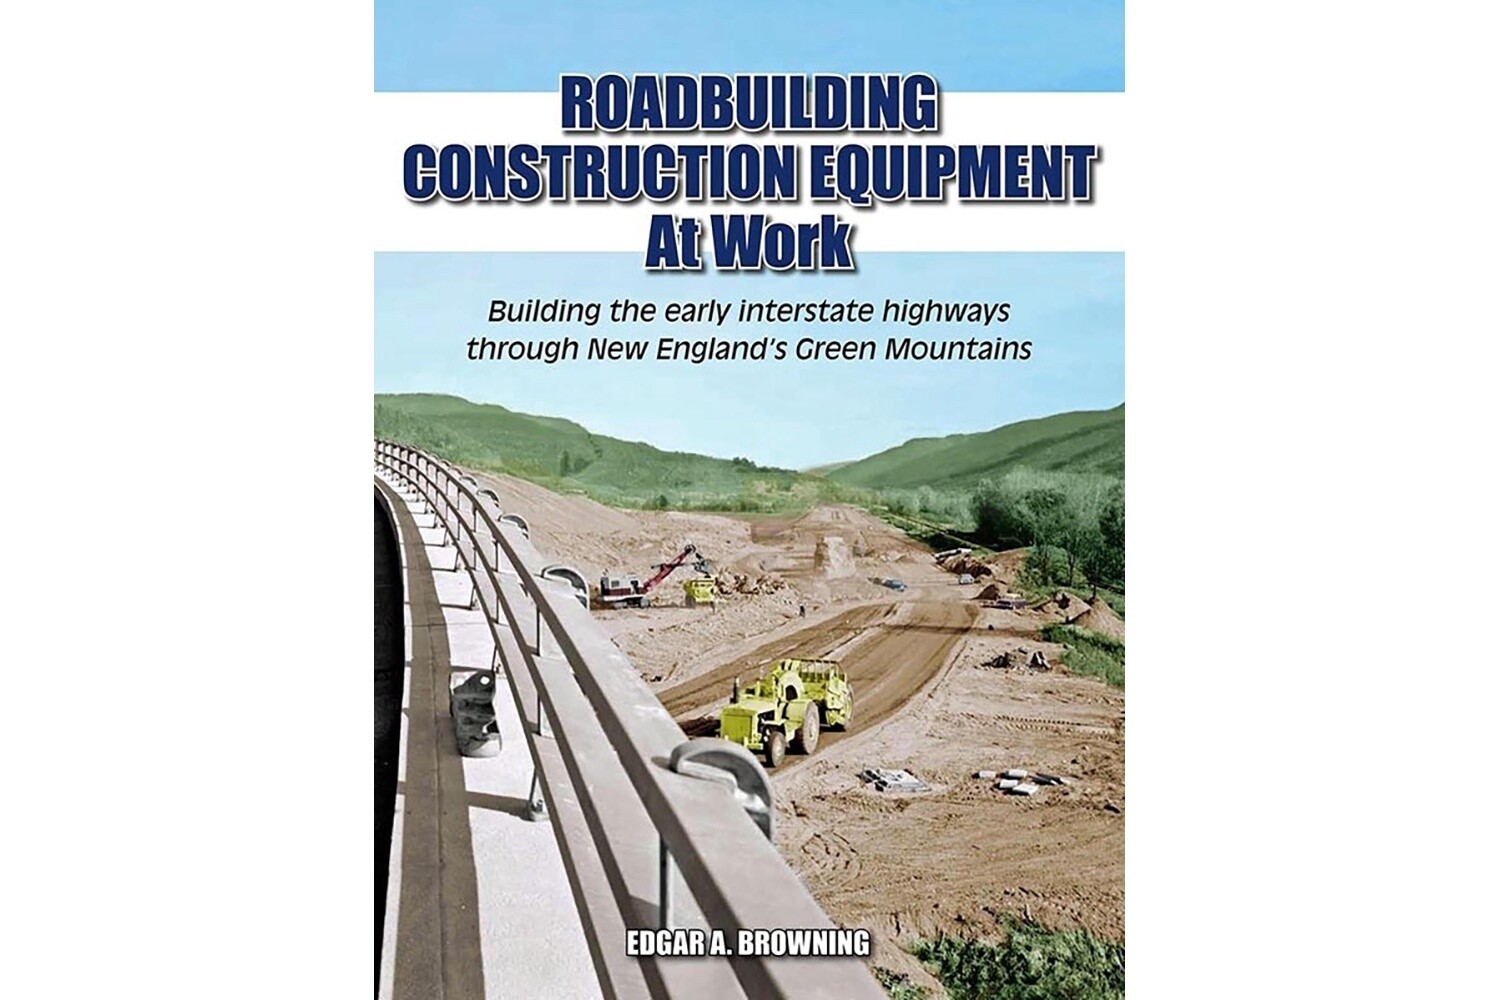 Roadbuilding Construction Equip at Work - New England